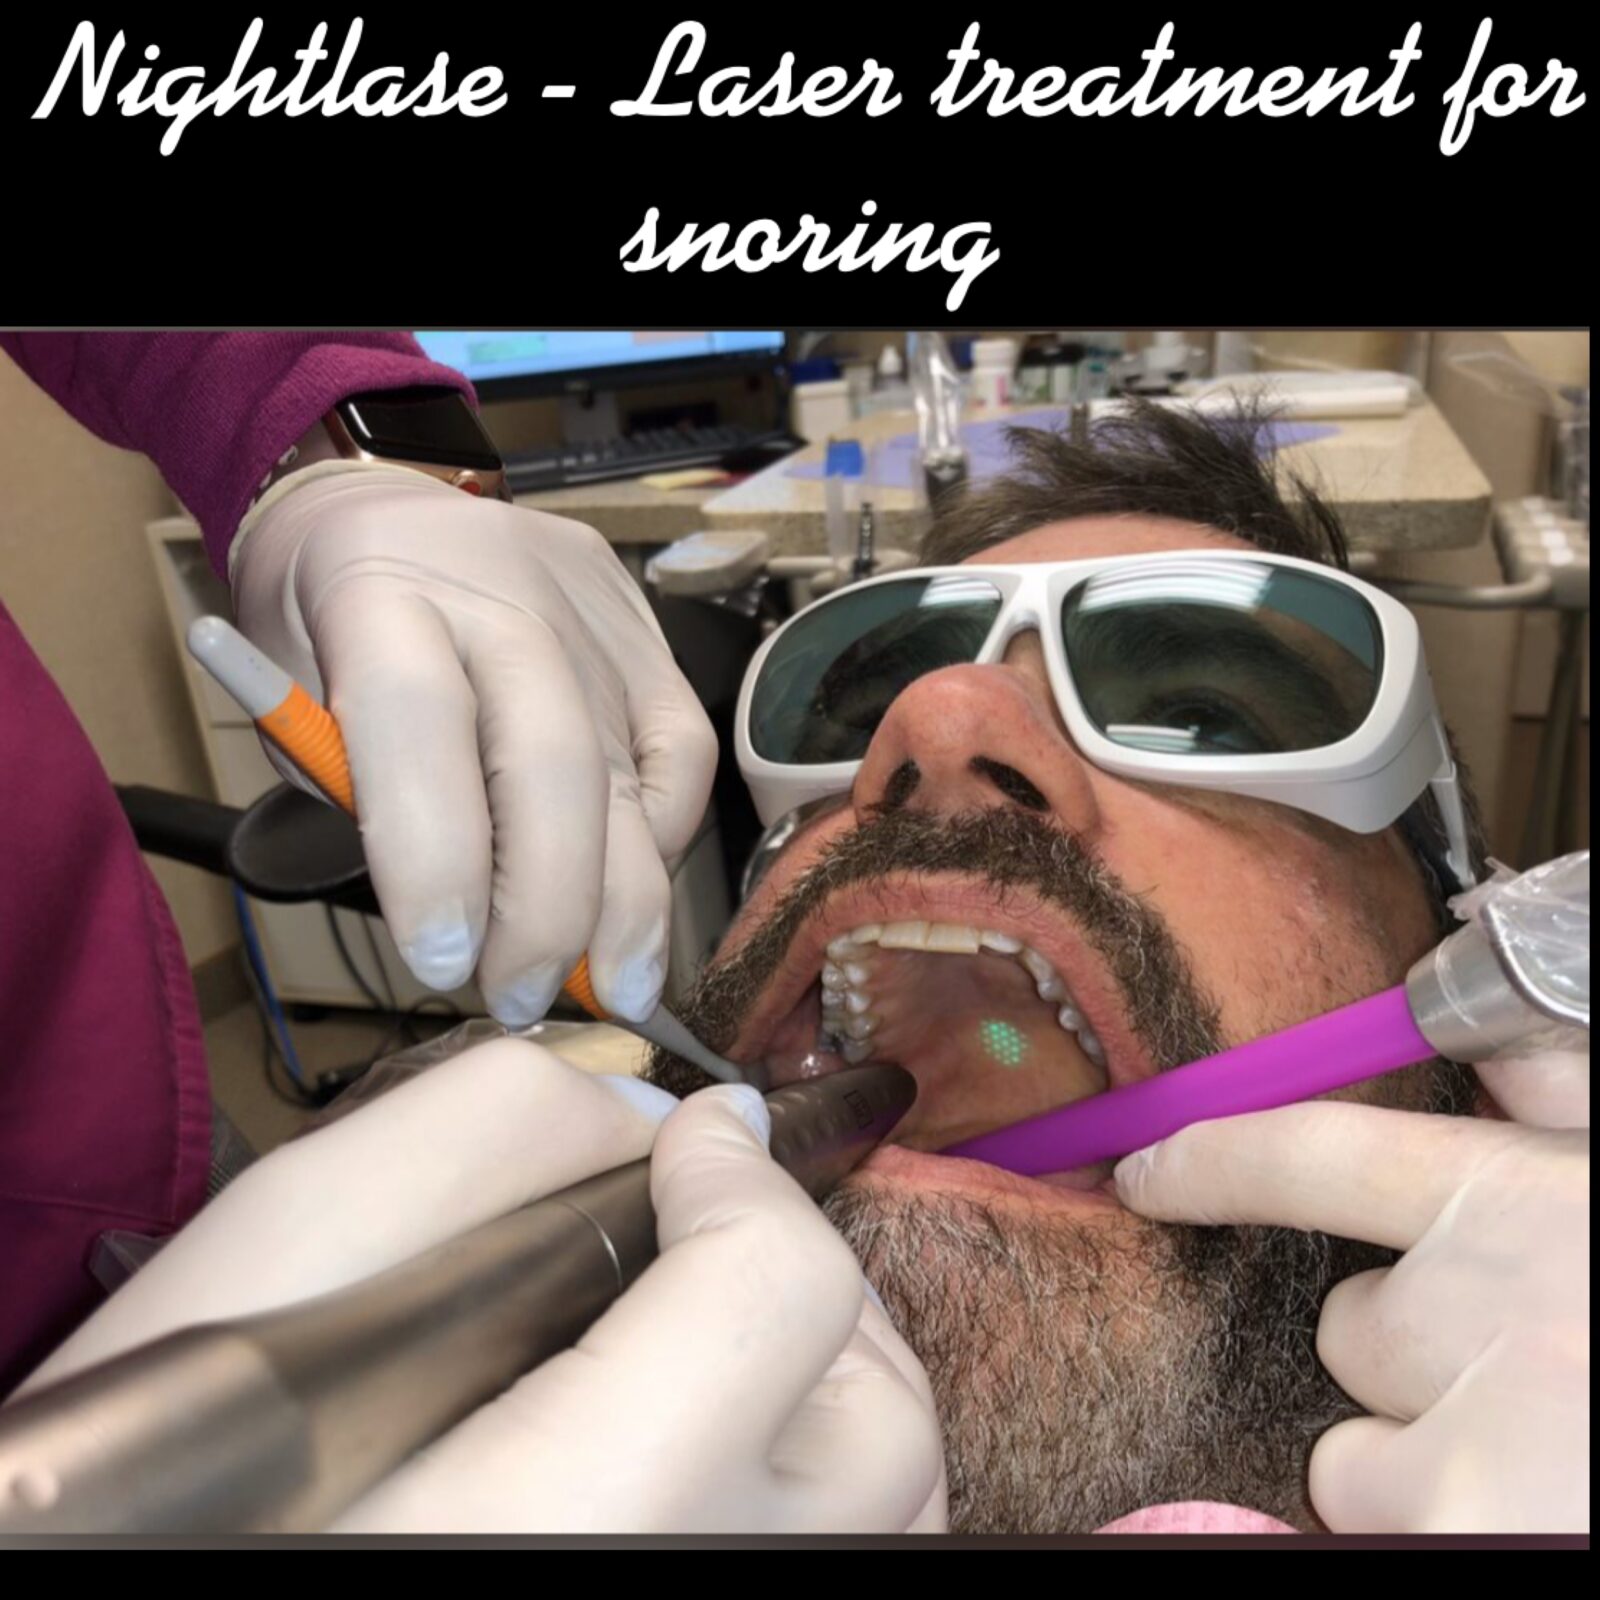 Nightlase – Laser treatment for snoring